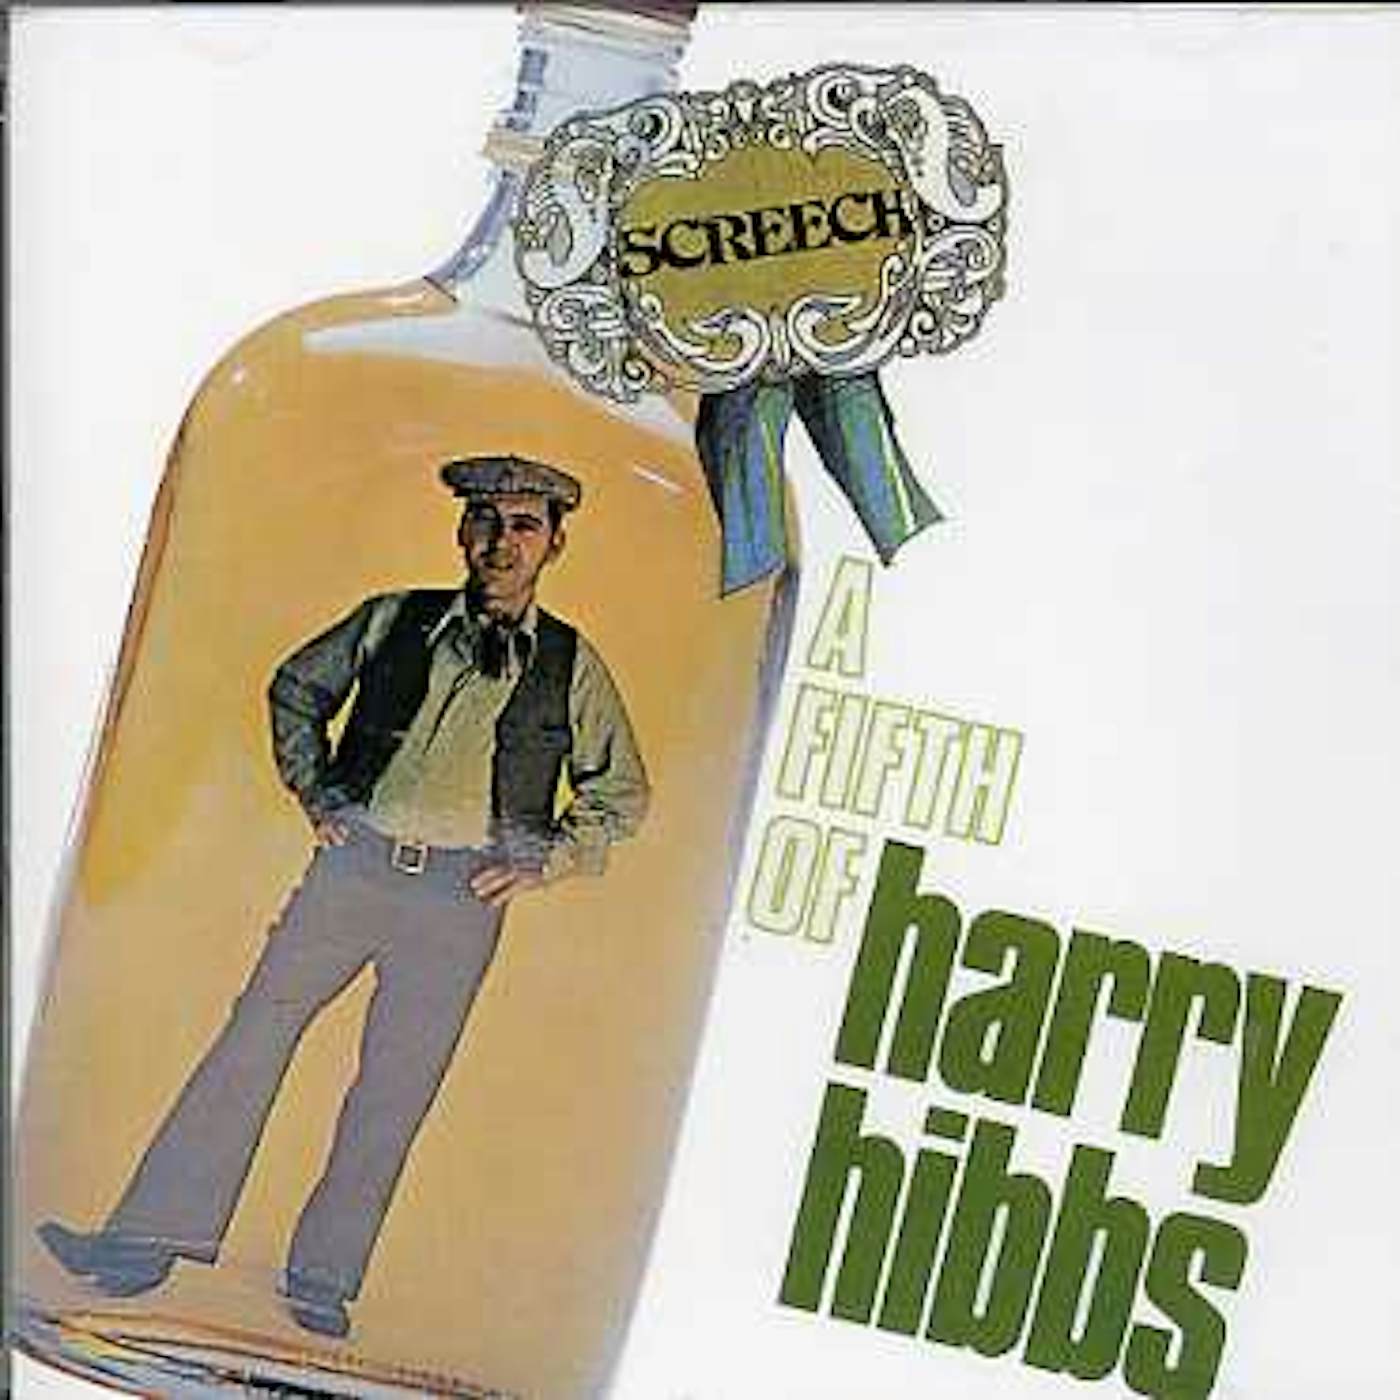 Harry Hibbs FIFTH OF CD